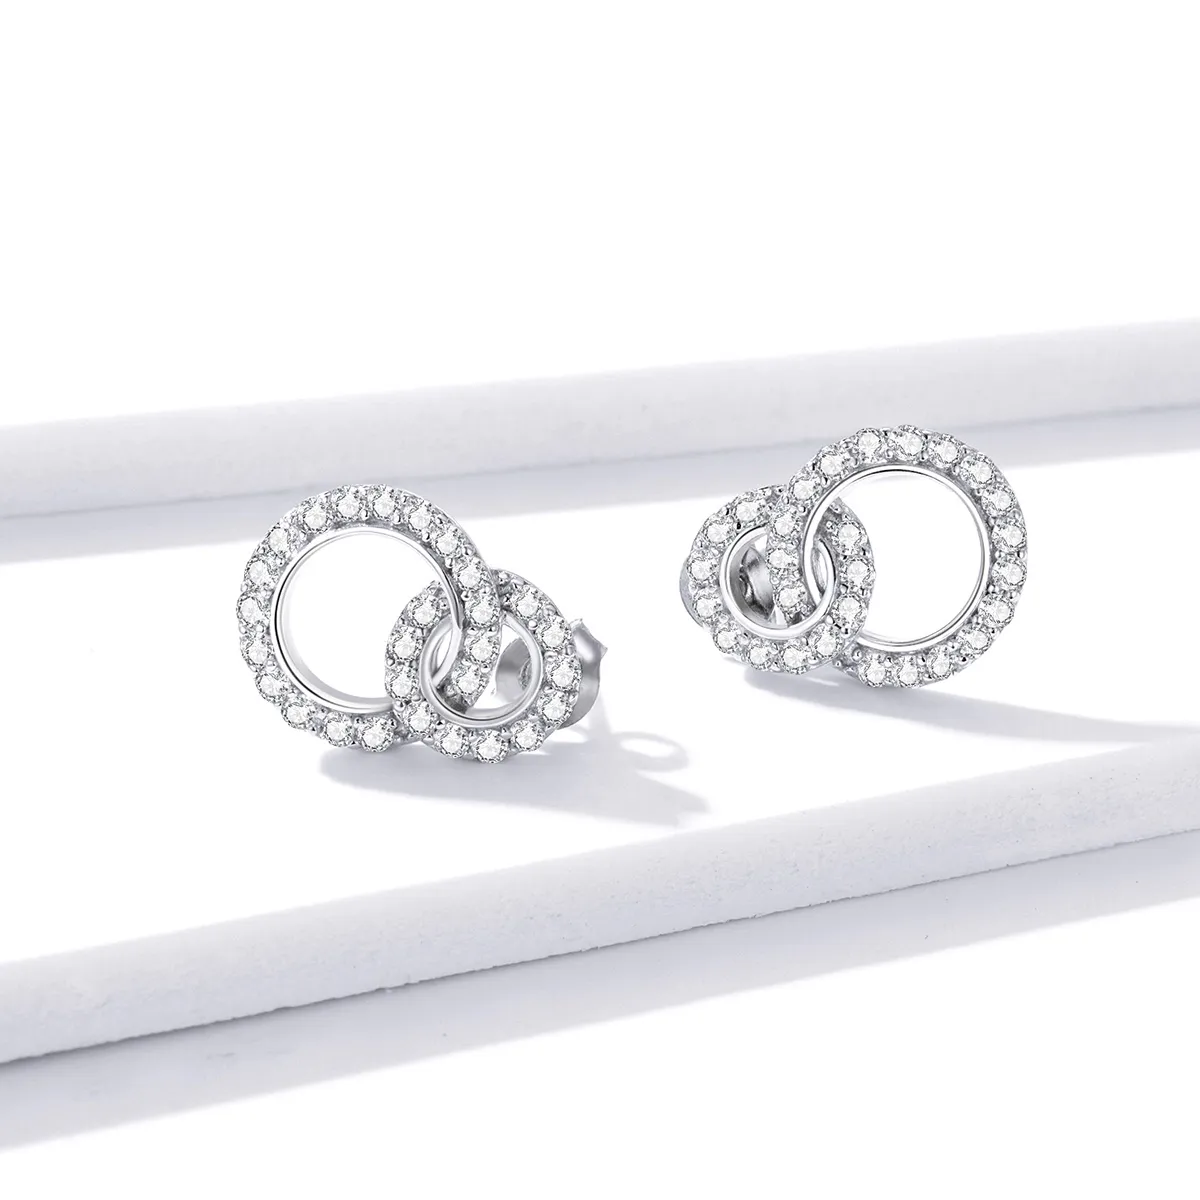 Pandora Style Silver Dazzling Doubles Stud Earrings - BSE388